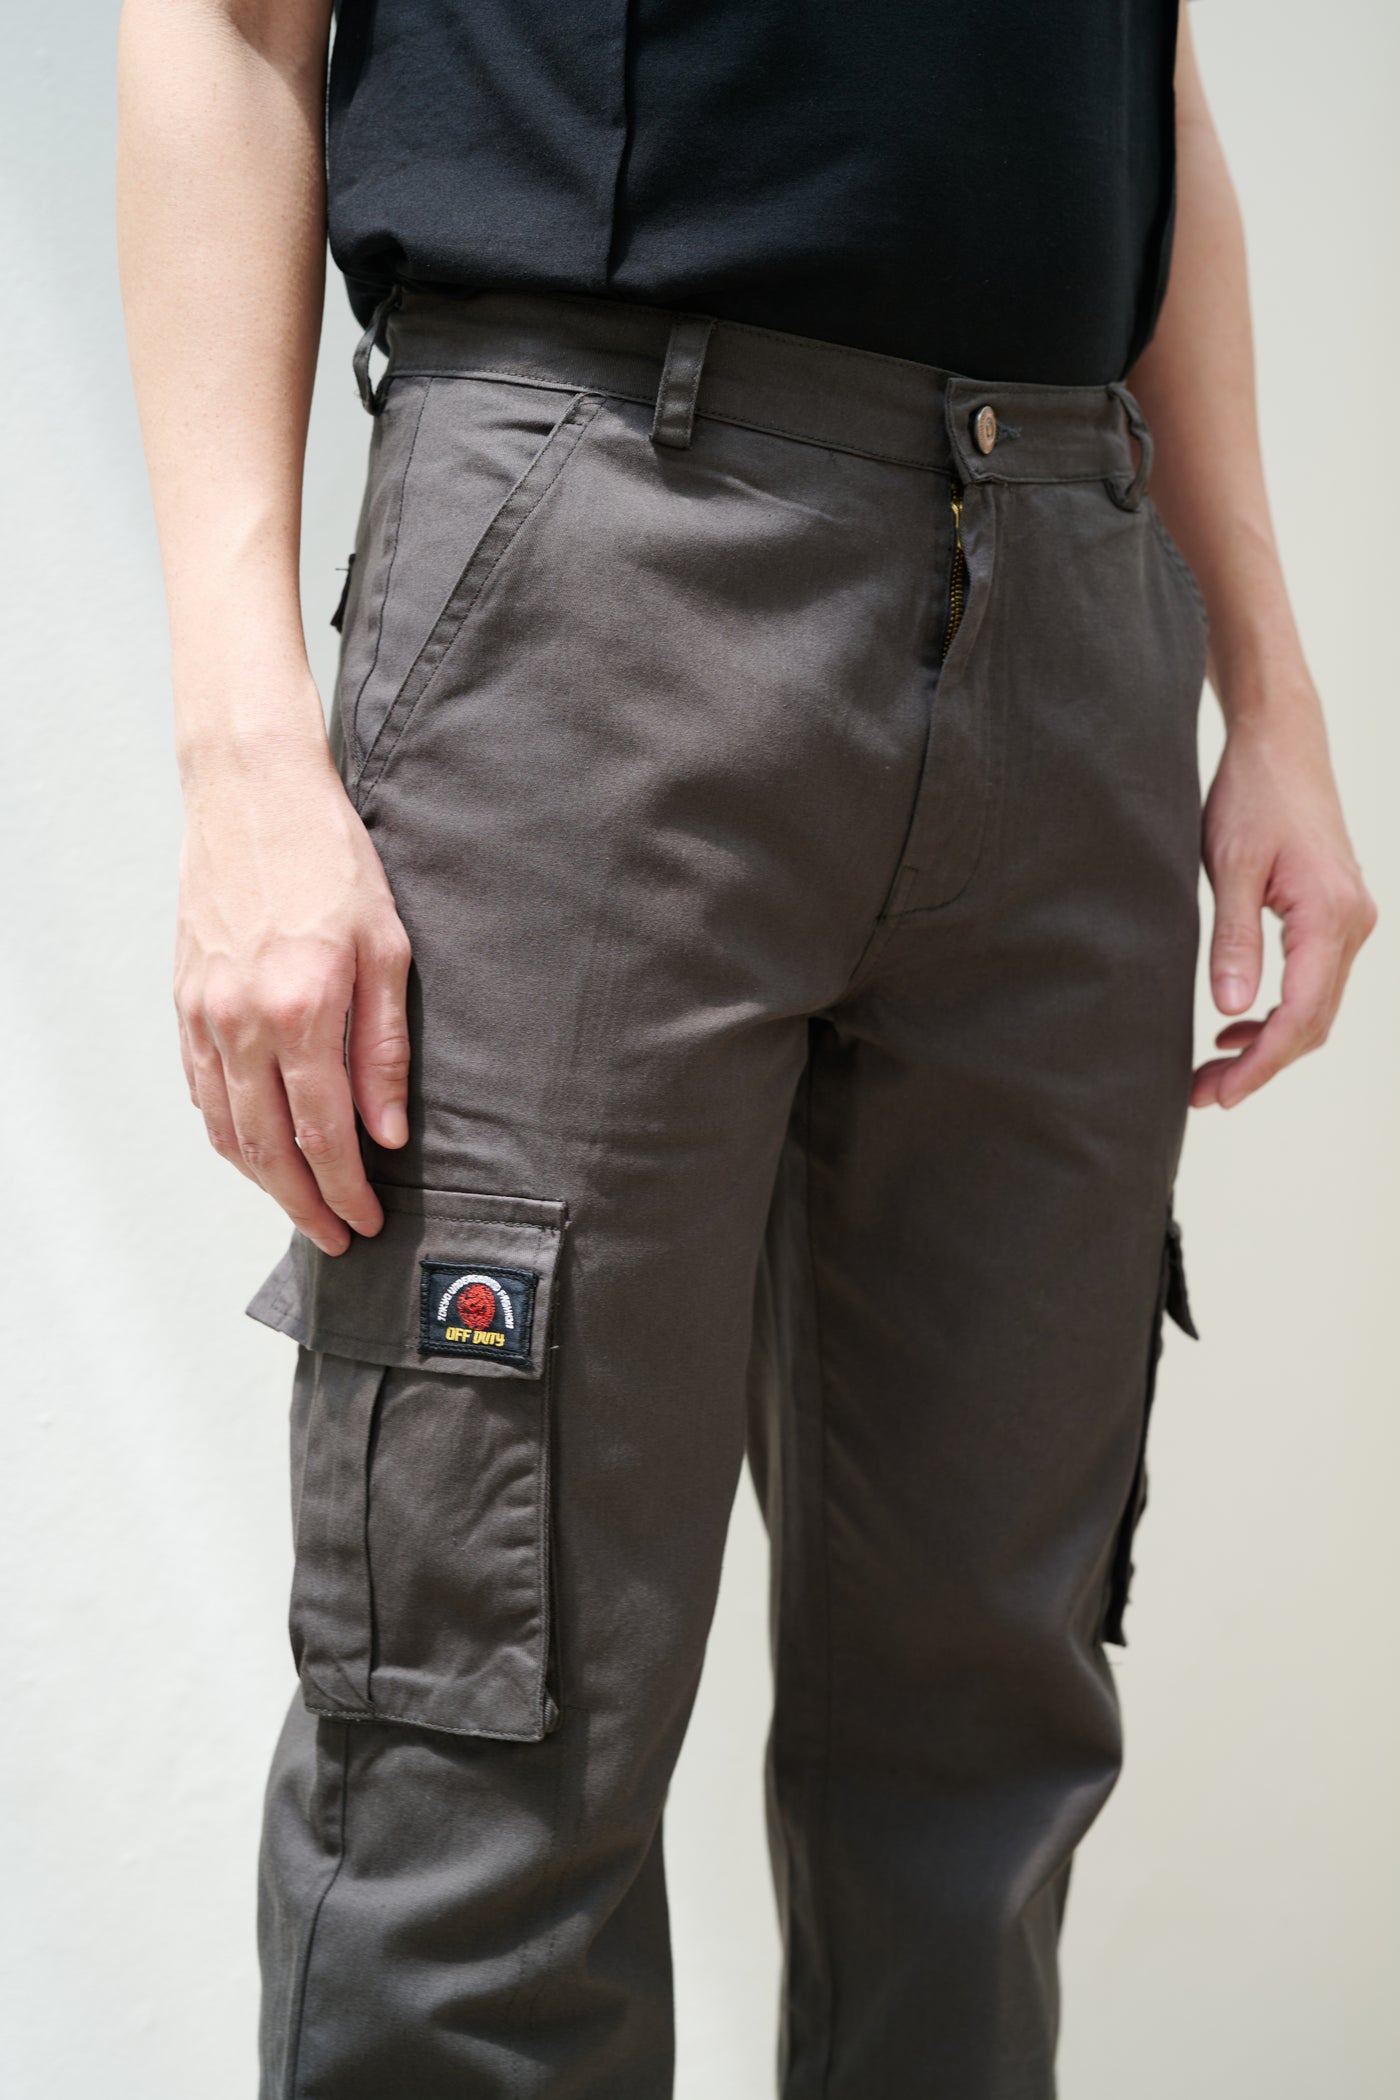 Urban Flex Pocket Cargo Trousers